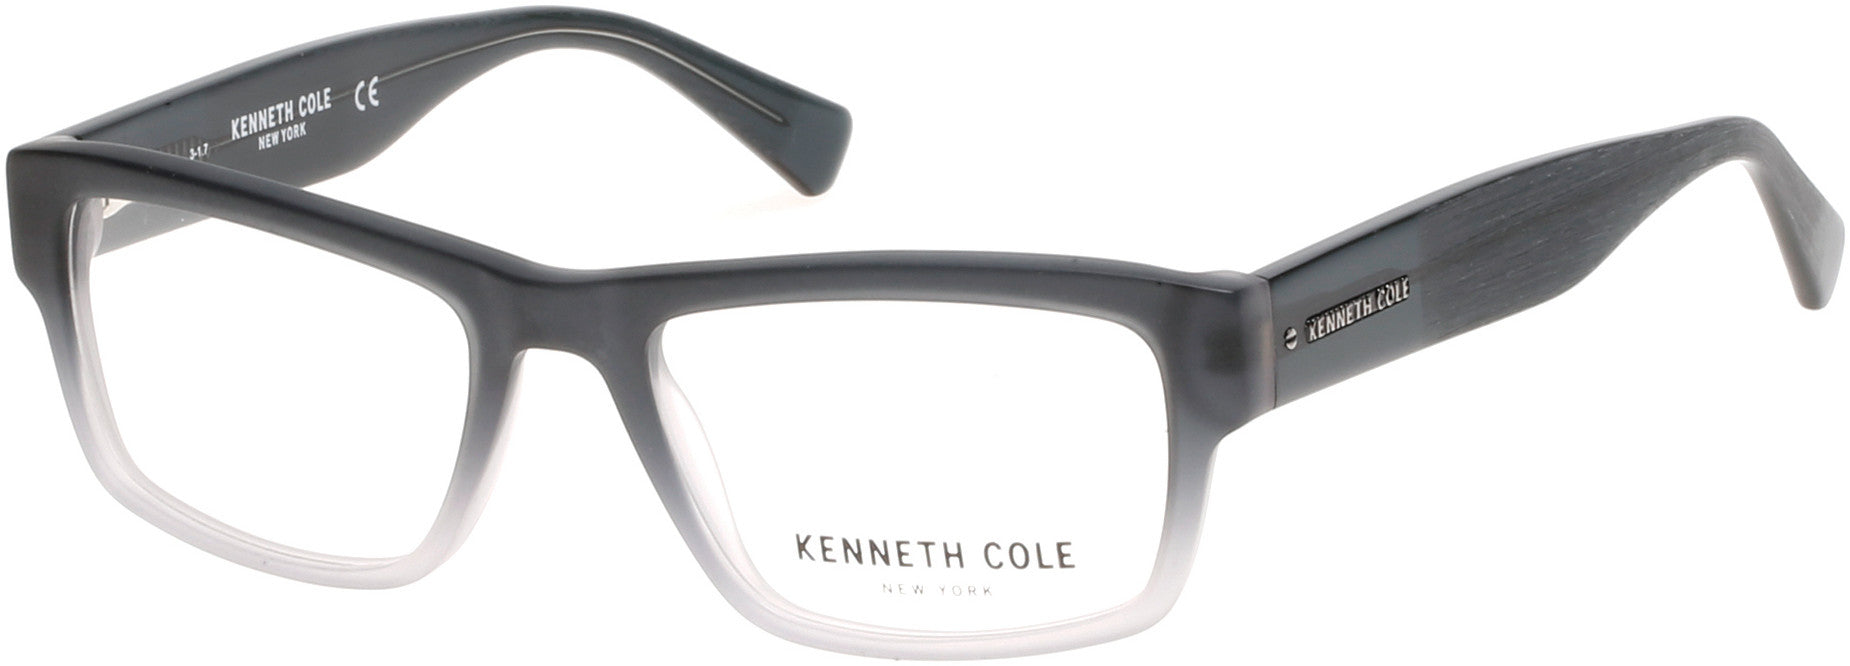 Kenneth Cole New York,Kenneth Cole Reaction KC0264 Eyeglasses 020-020 - Grey